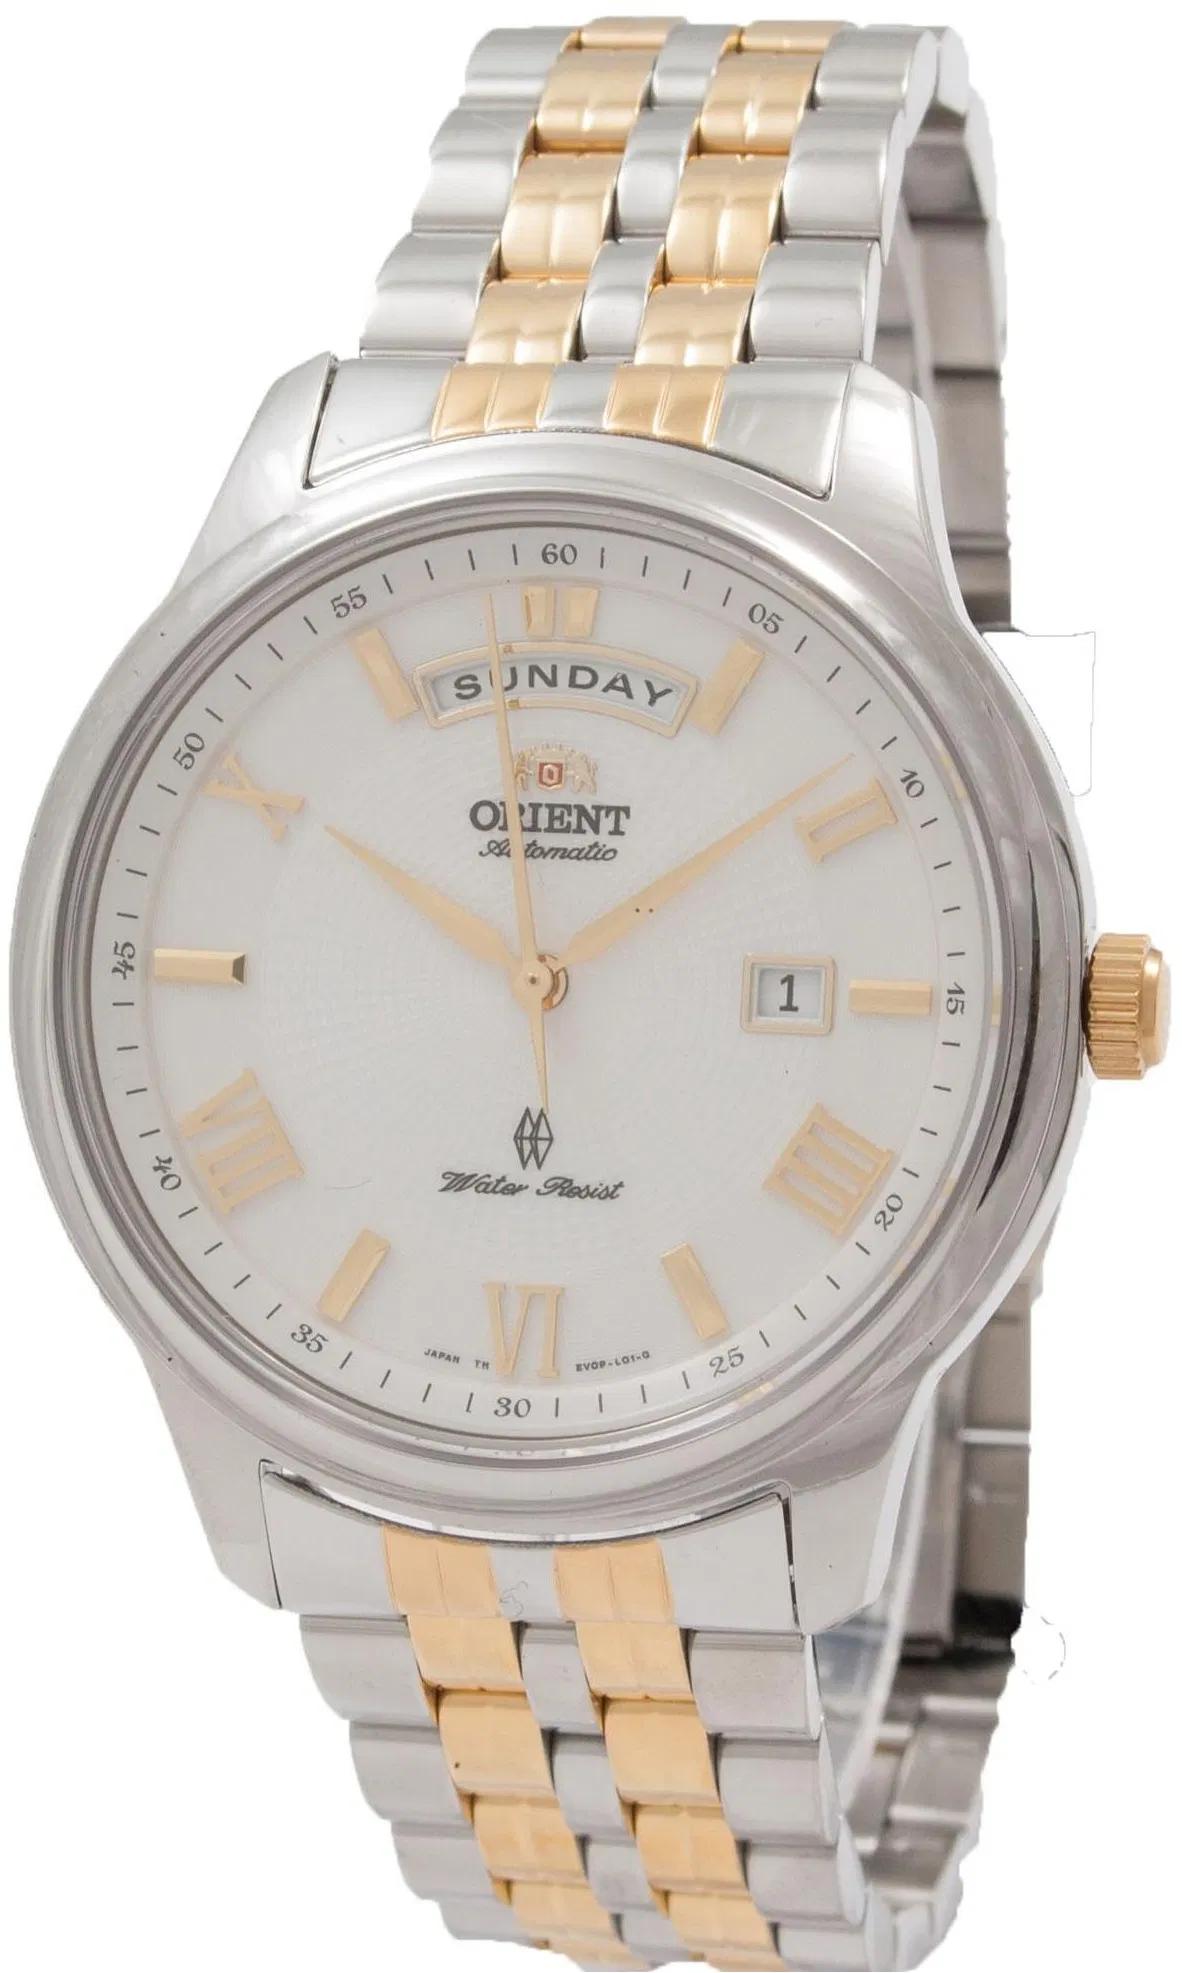 Наручные часы automatic. Orient ev0p001w. Наручные часы Orient Automatic. Часы наручные мужские Orient Automatic. Часы Orient Automatic мужские.